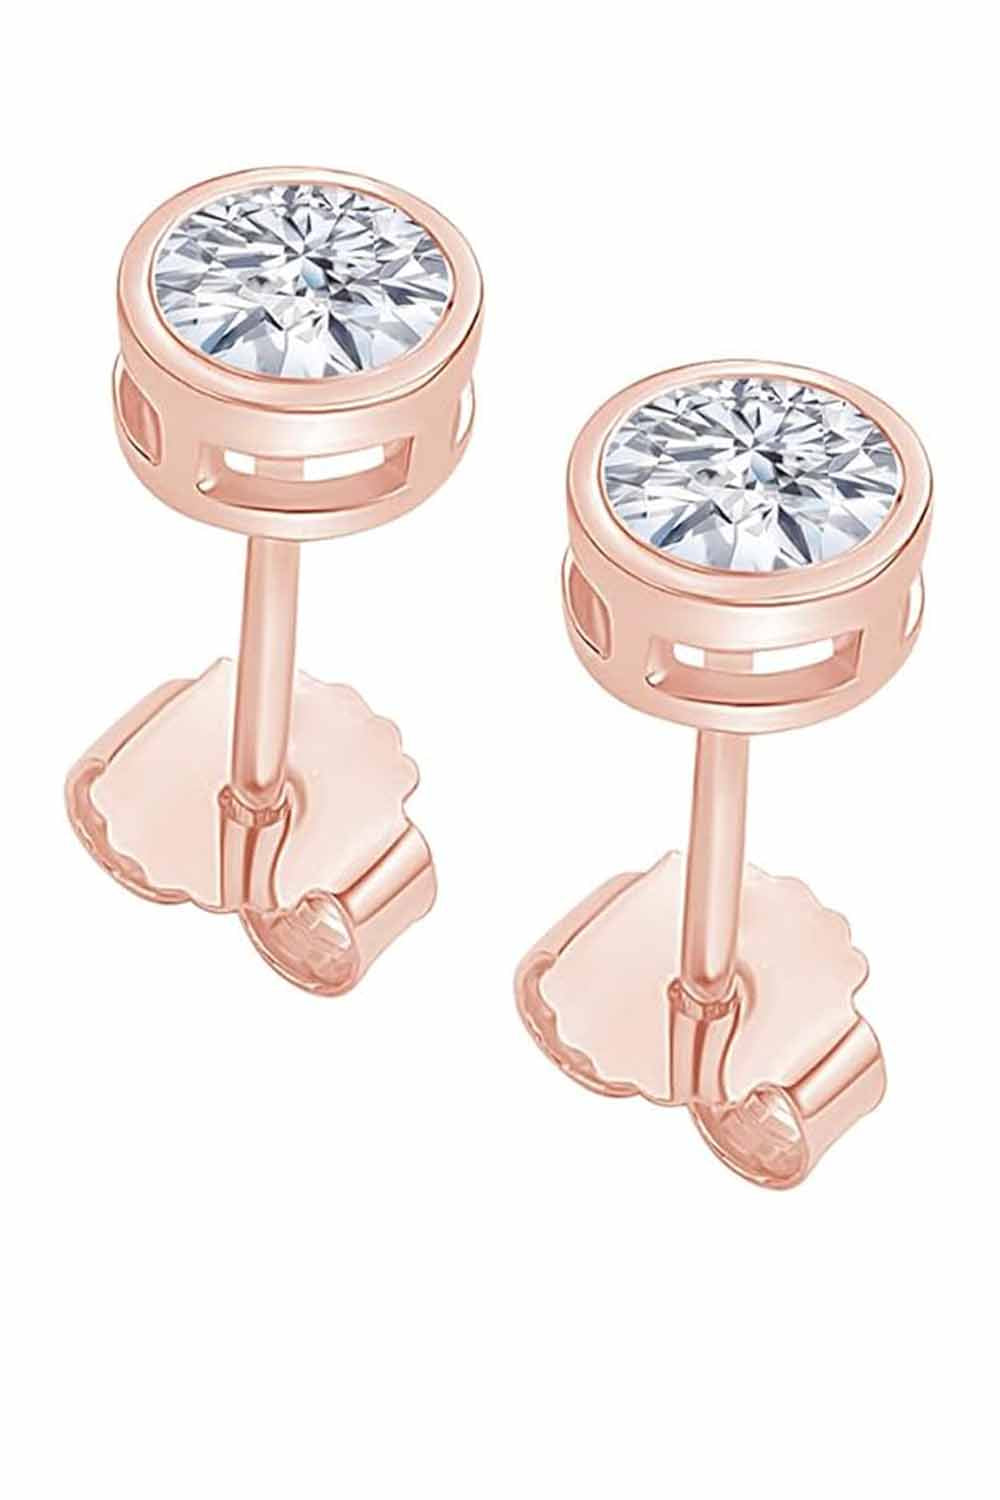 Rose Gold Color Diamond Bezel Stud Earrings, Stud Earrings for Women 